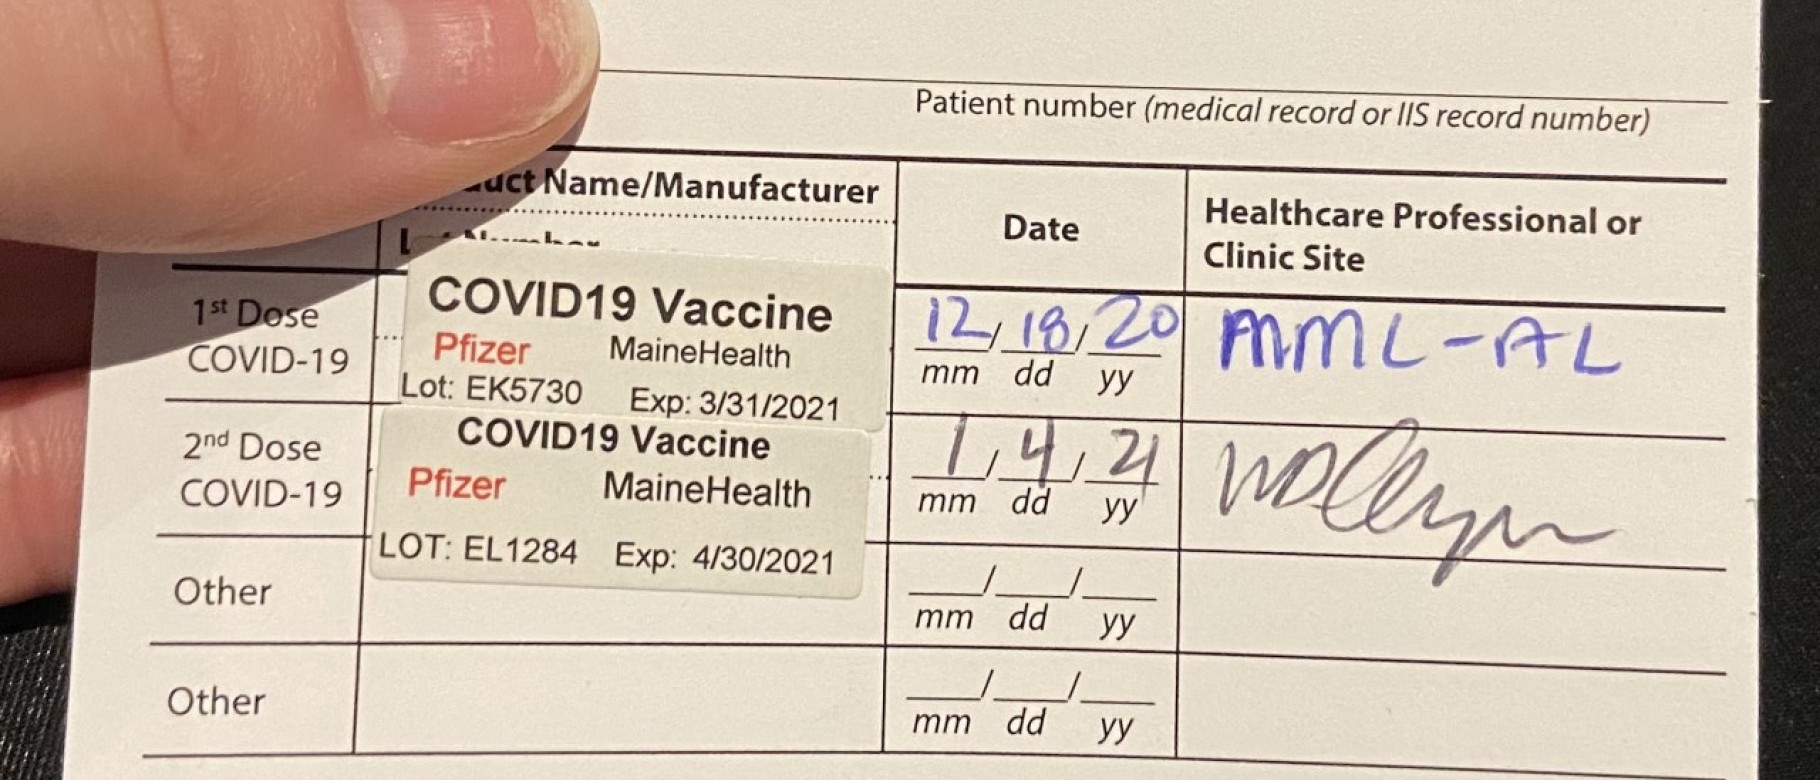 Bischoff's vaccination card